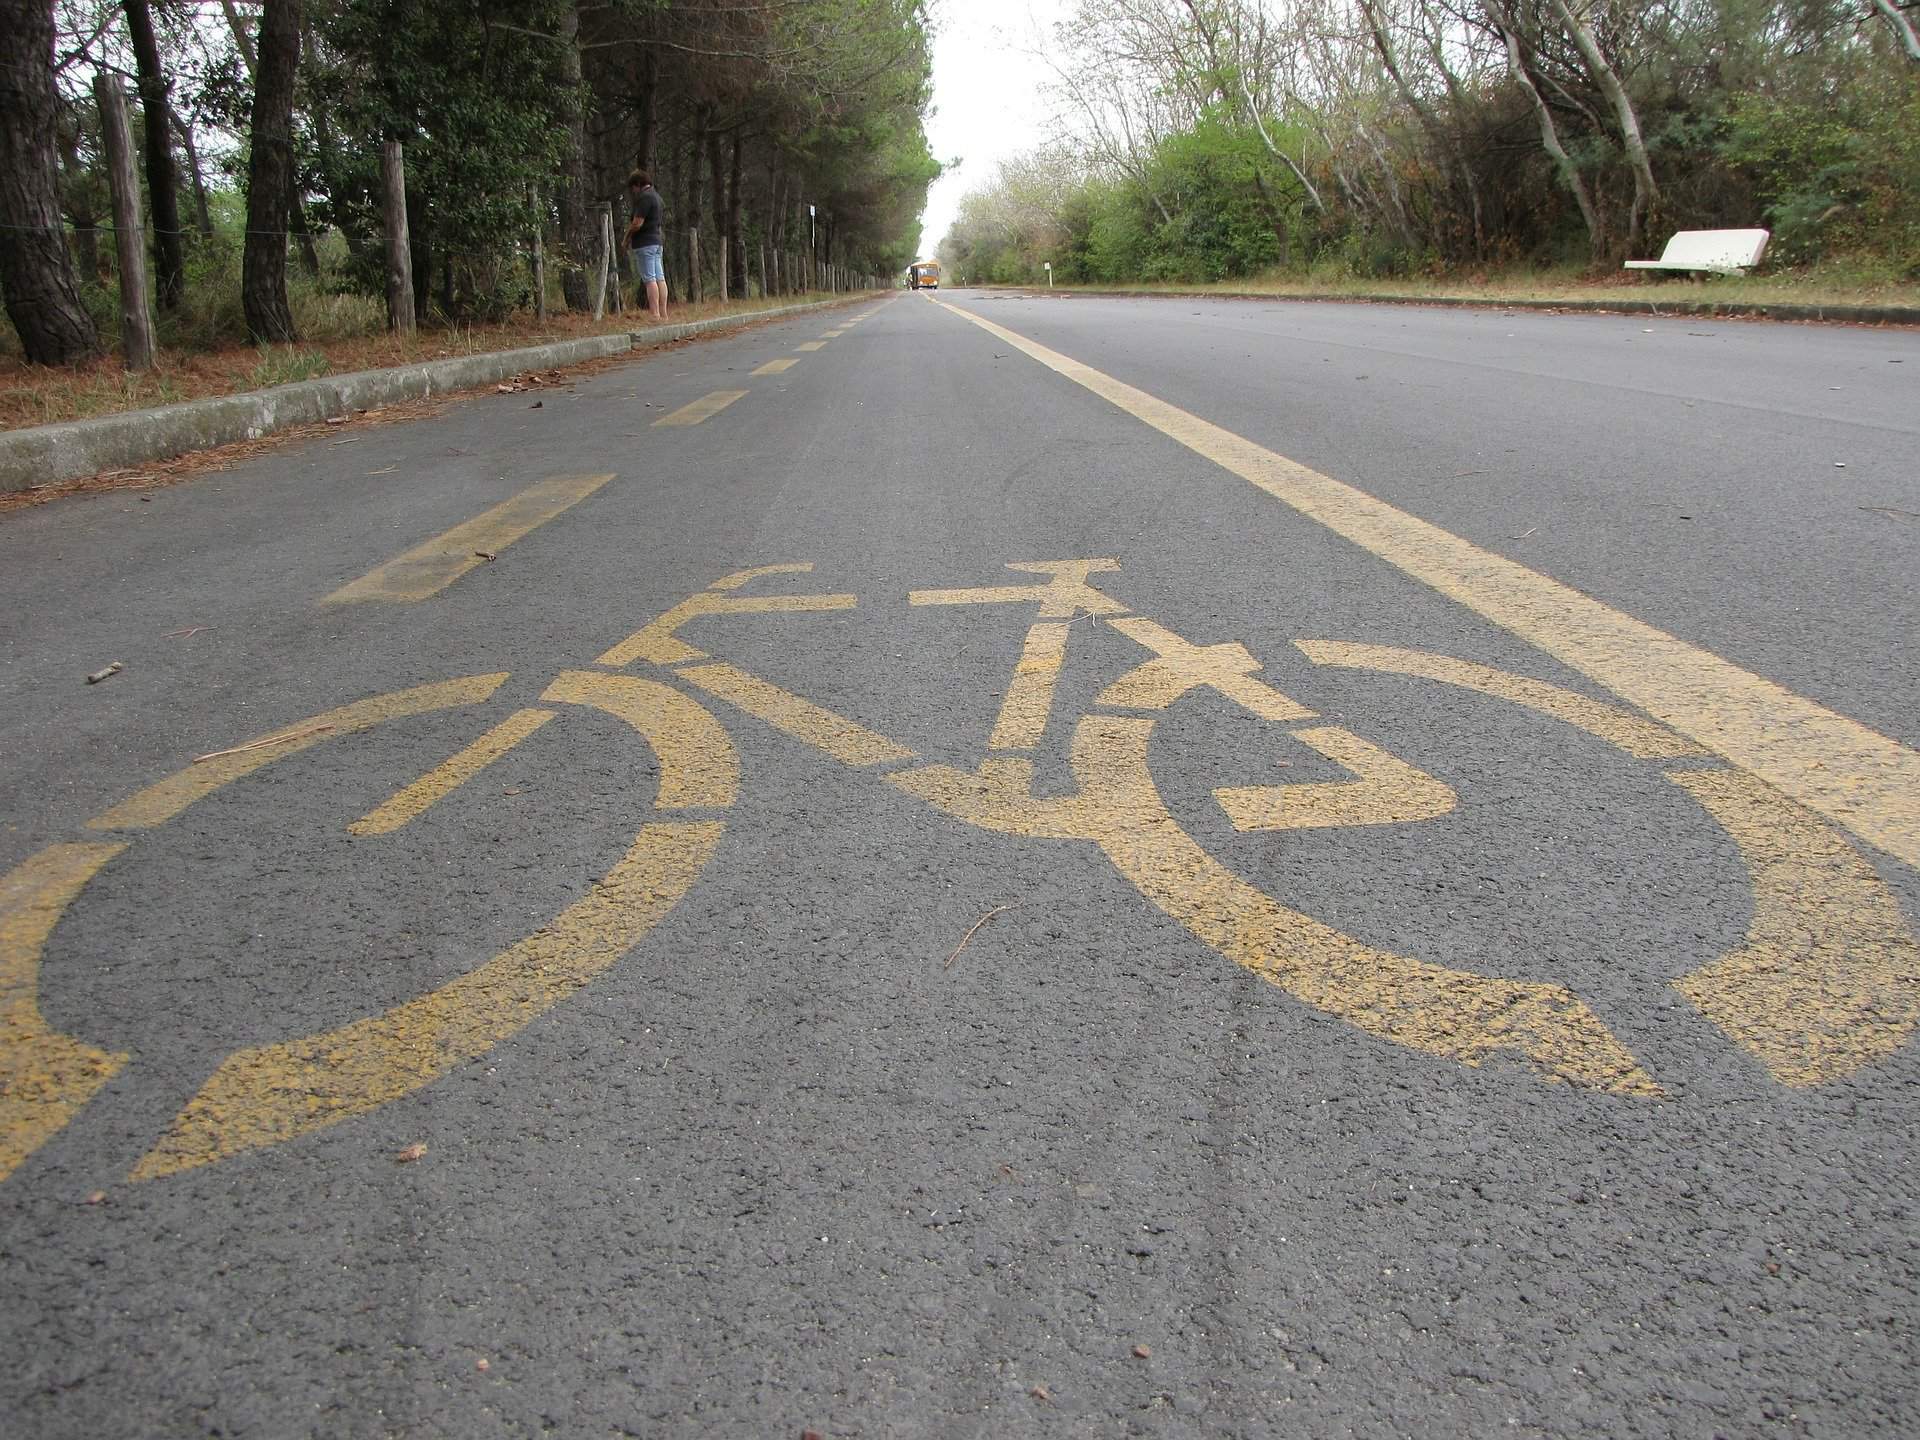 Fahrradweg-Schild